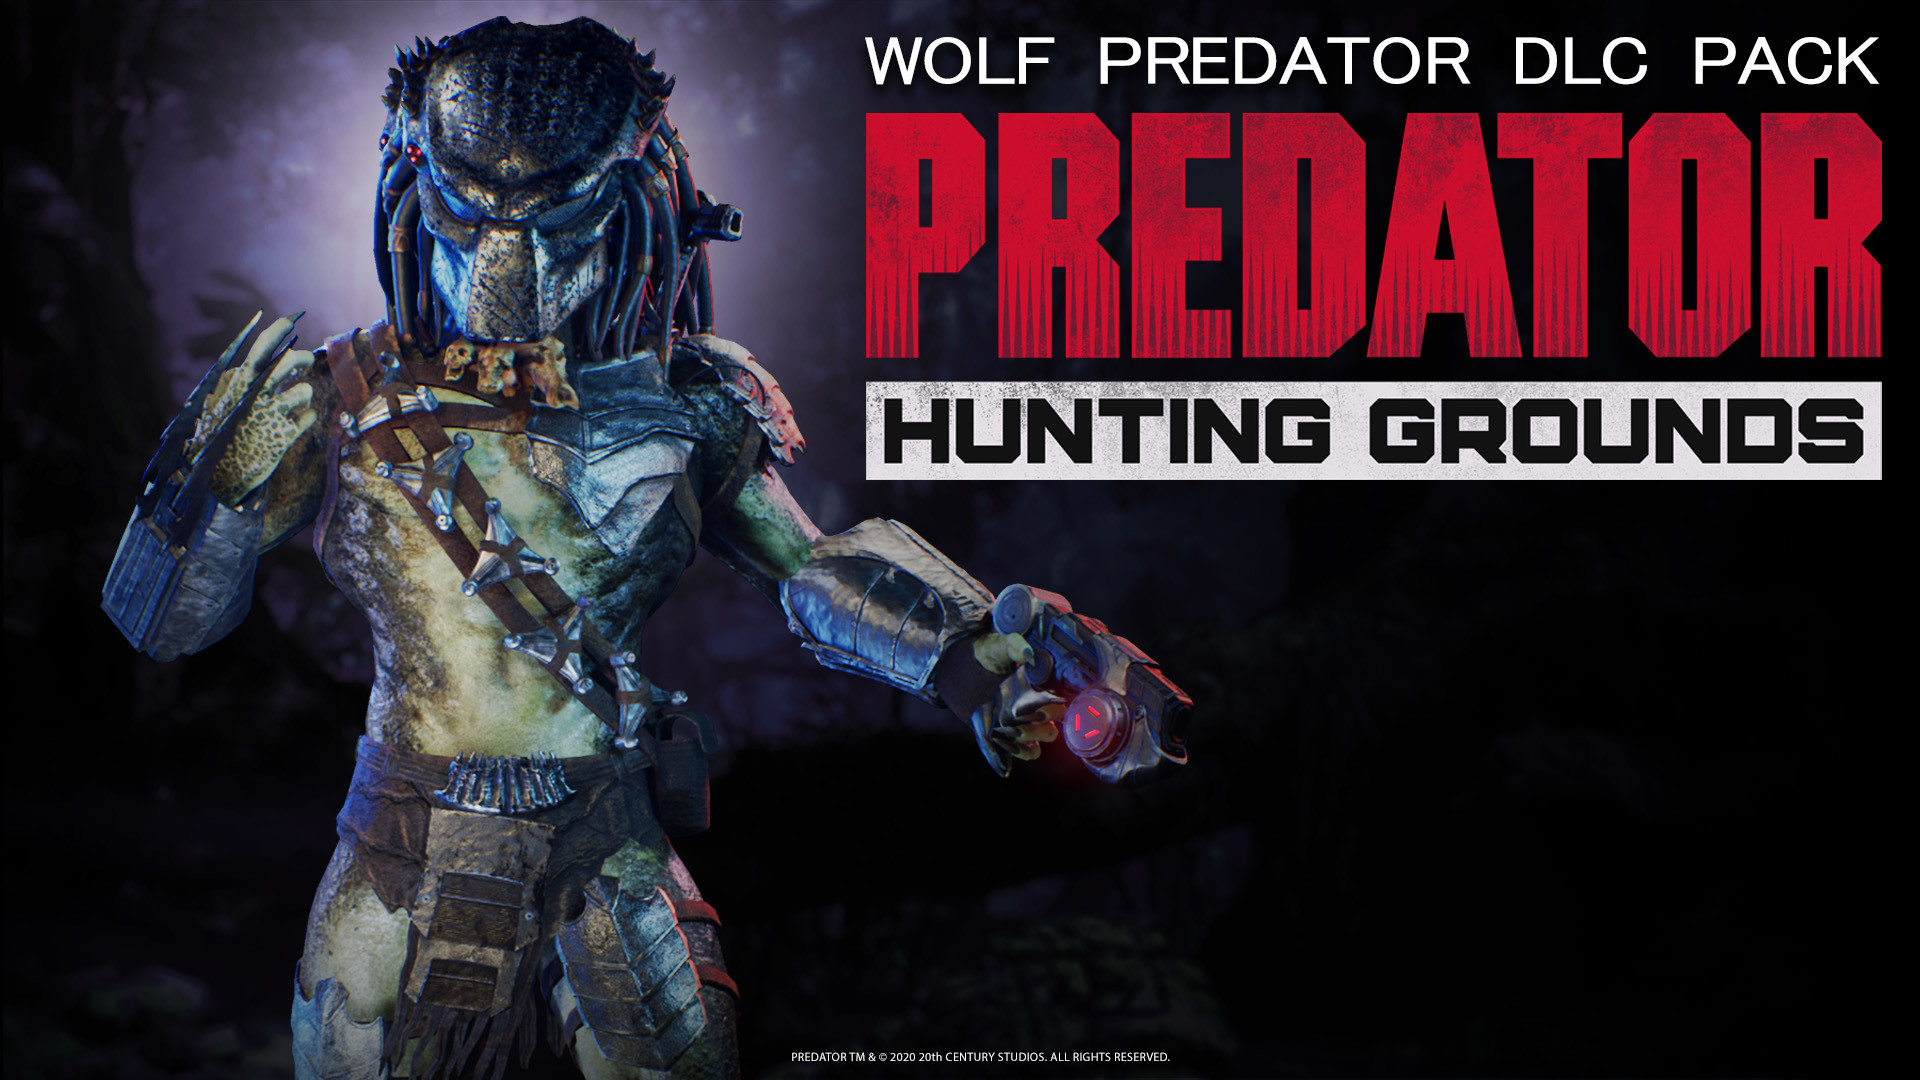 Predator: Hunting Grounds - Wolf Predator DLC Pack Featured Screenshot #1